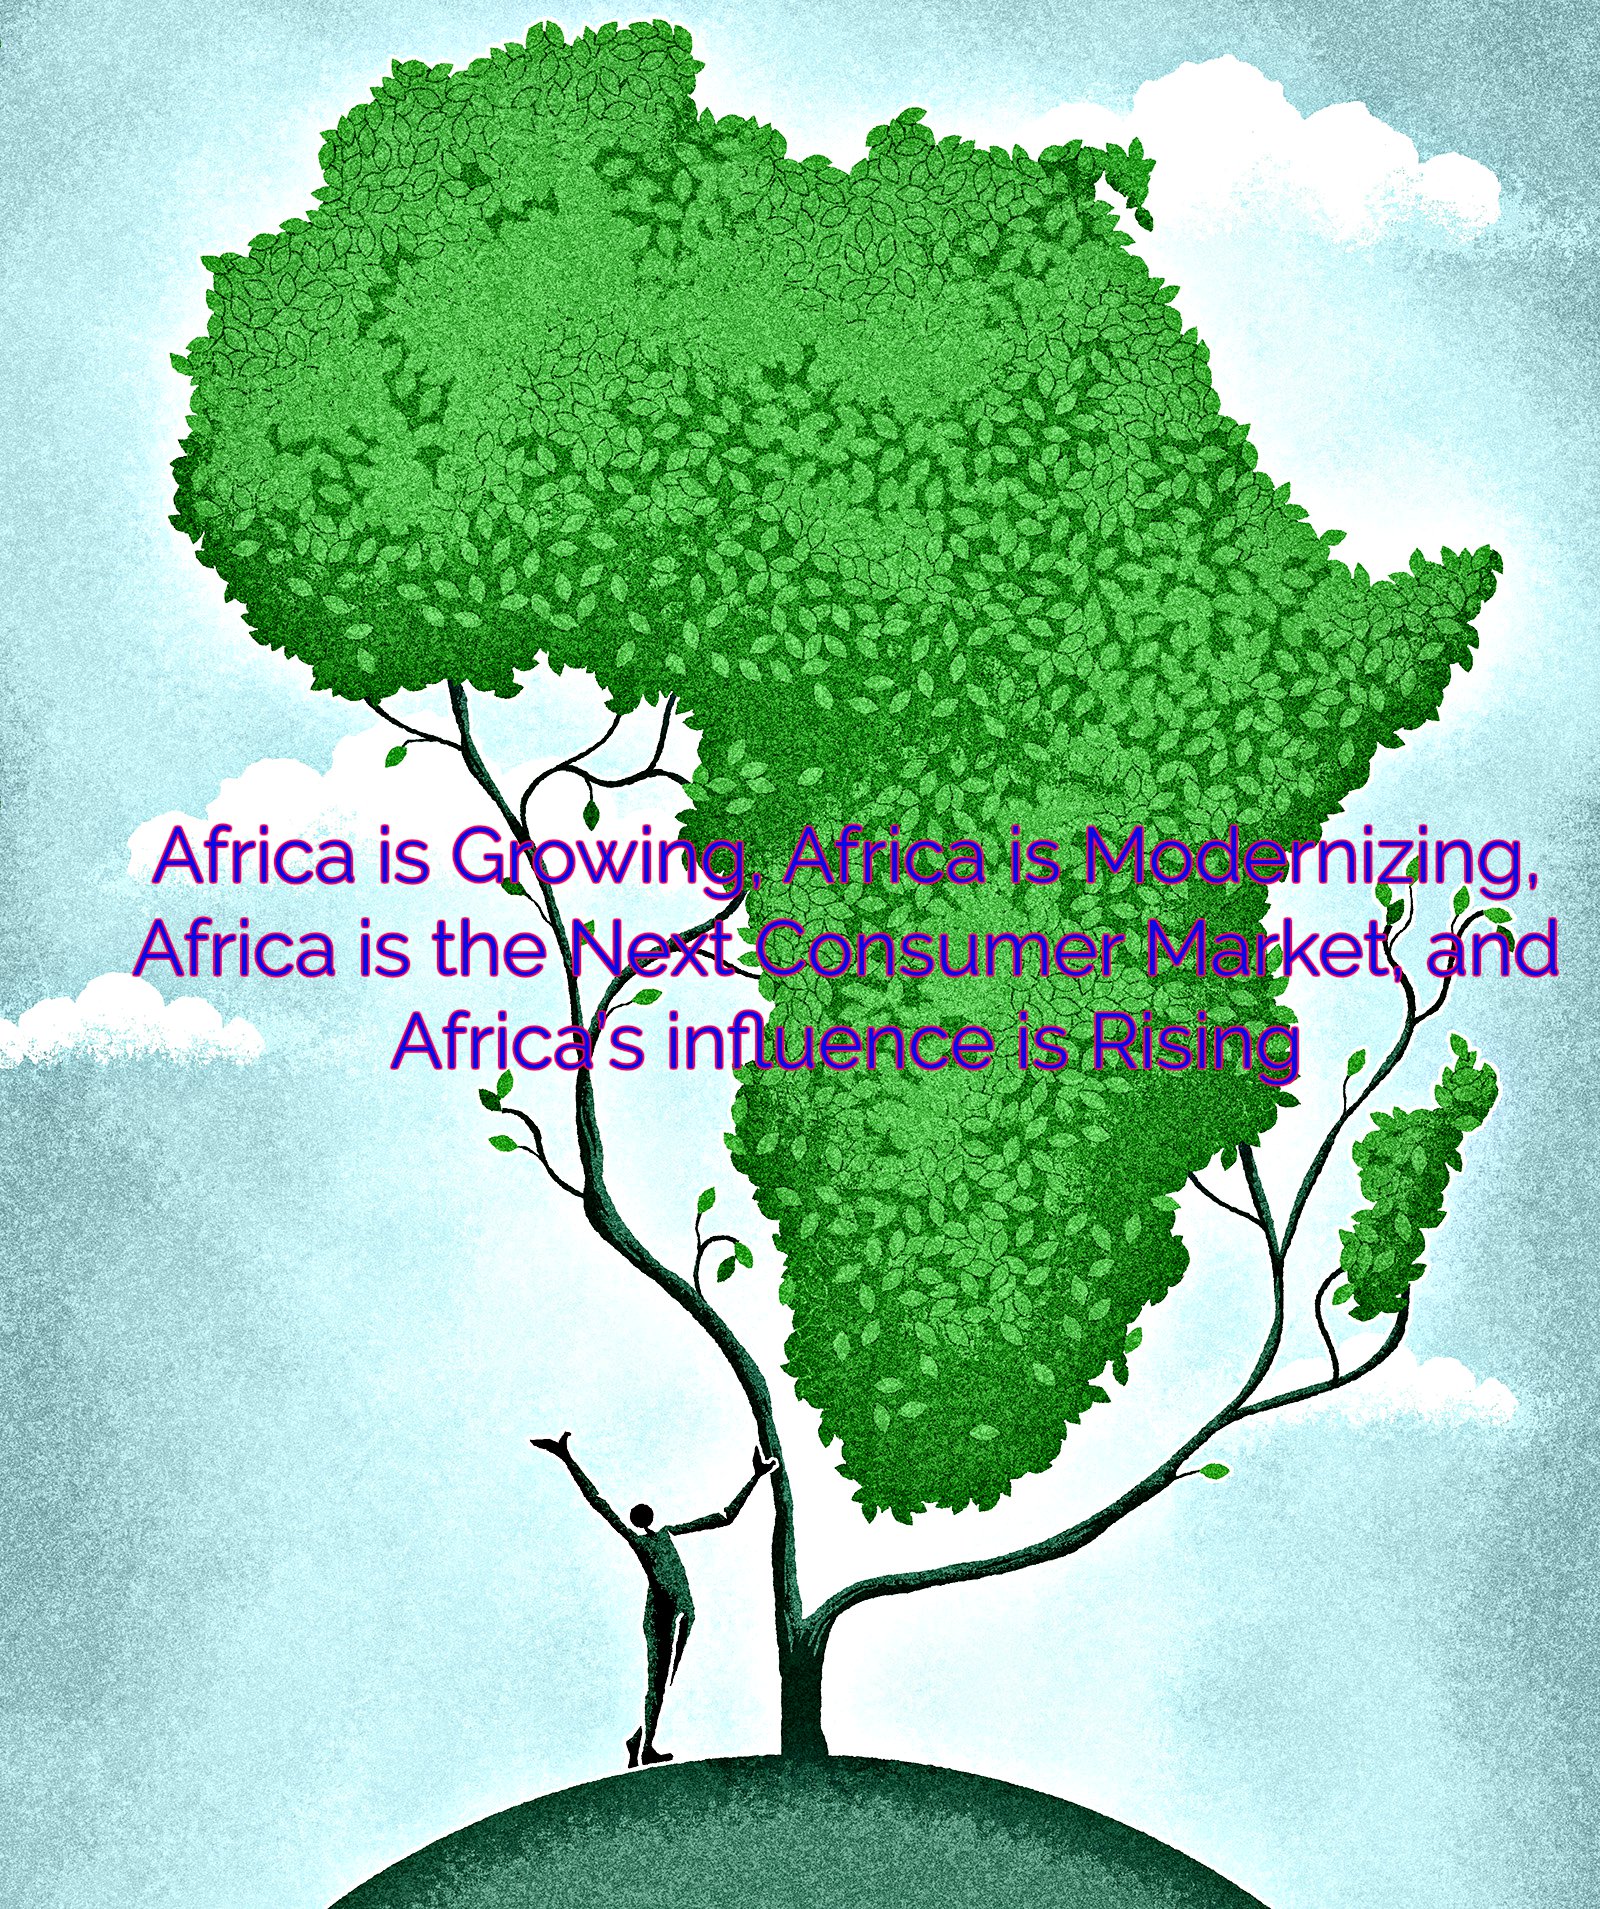 africas-growing